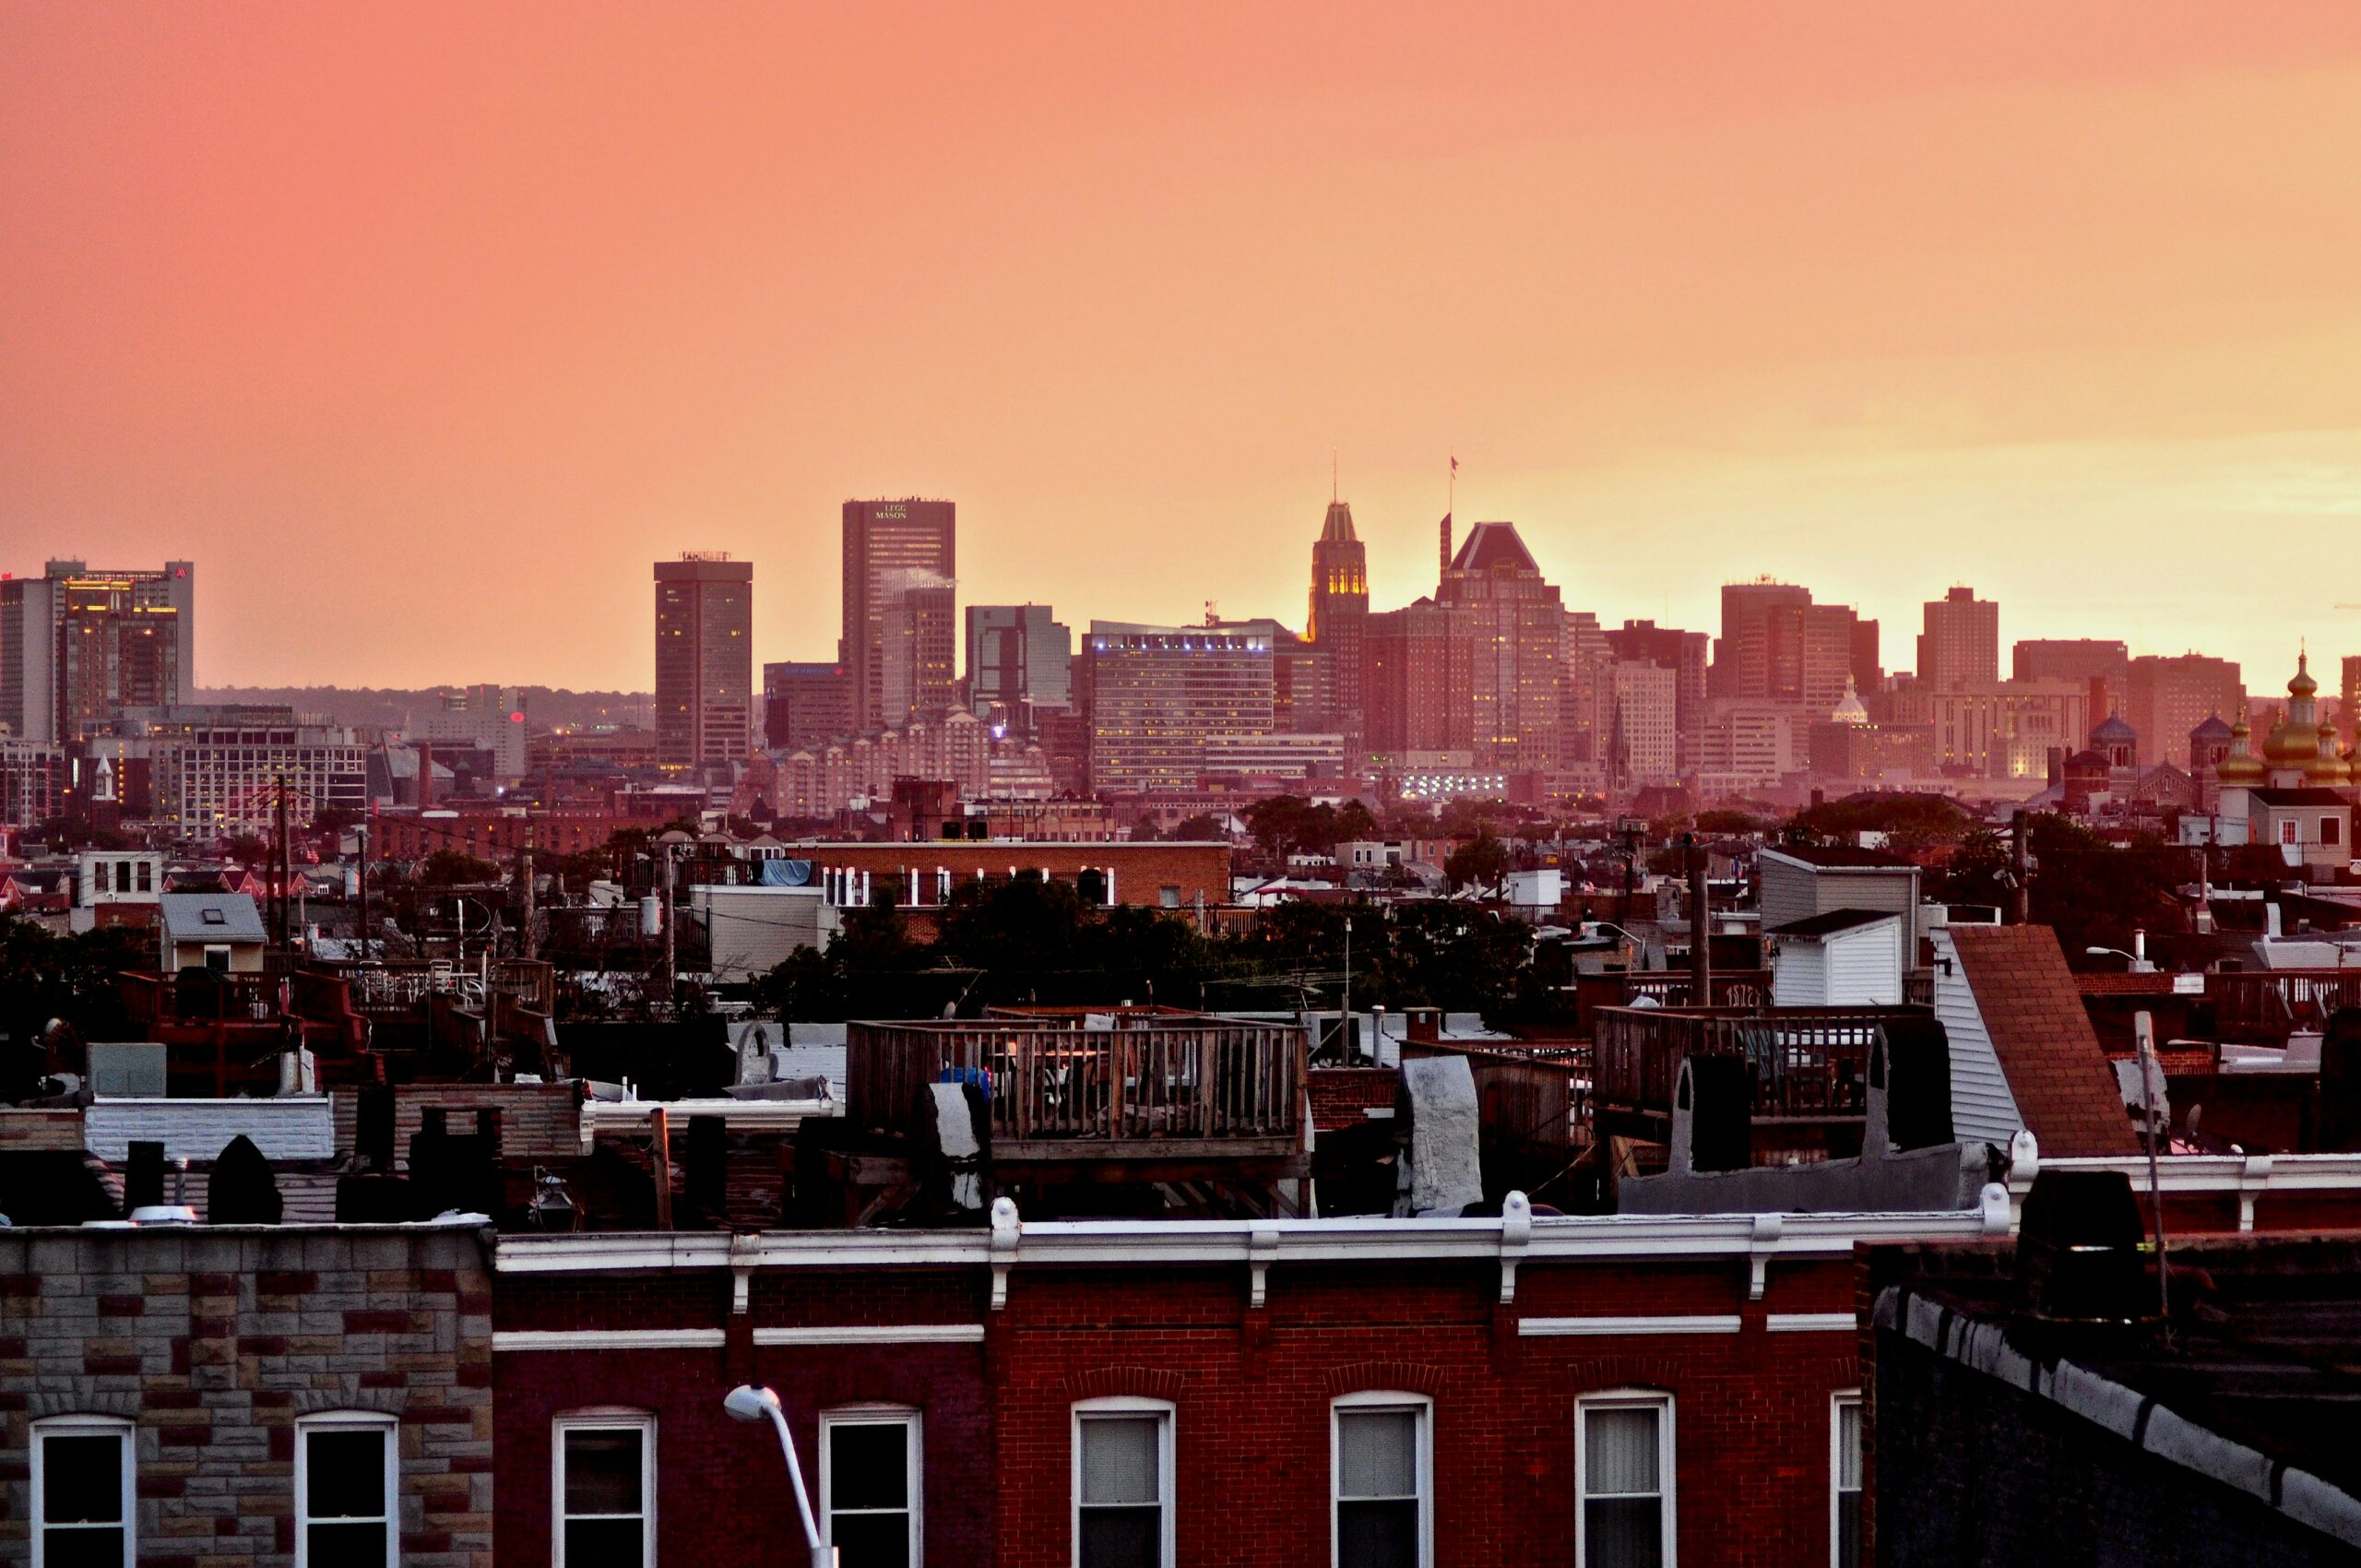 The Baltimore Sun: “Baltimore City Council advances inclusive housing legislation despite some concerns”